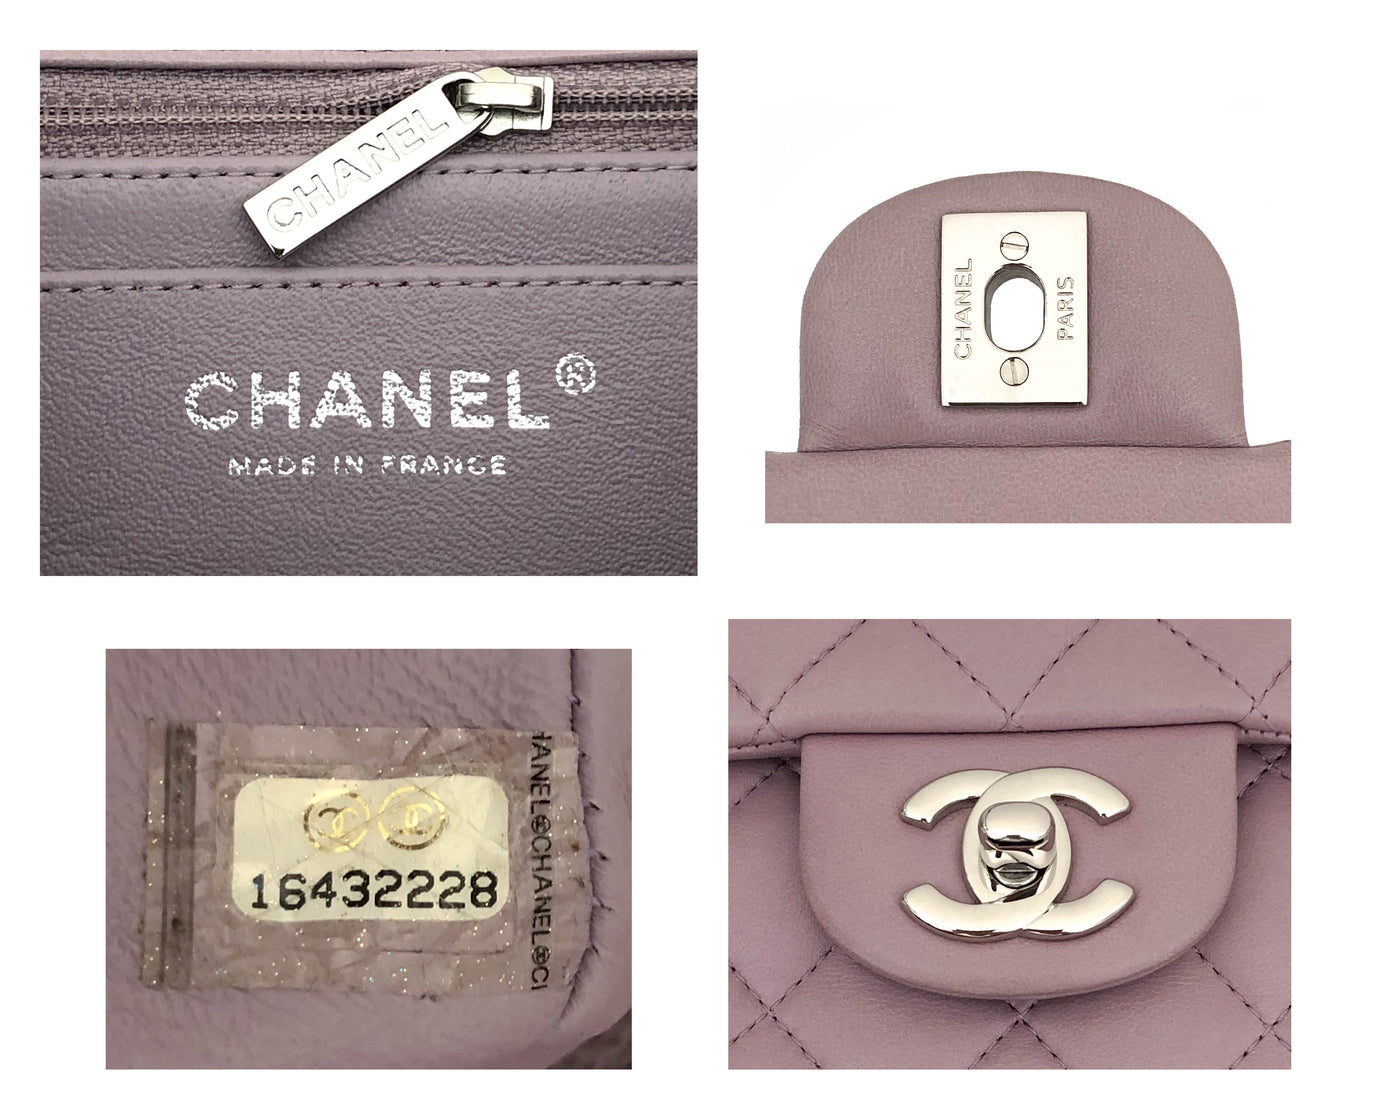 Chanel Rare Lavender Purple Lambskin Square Mini Flap